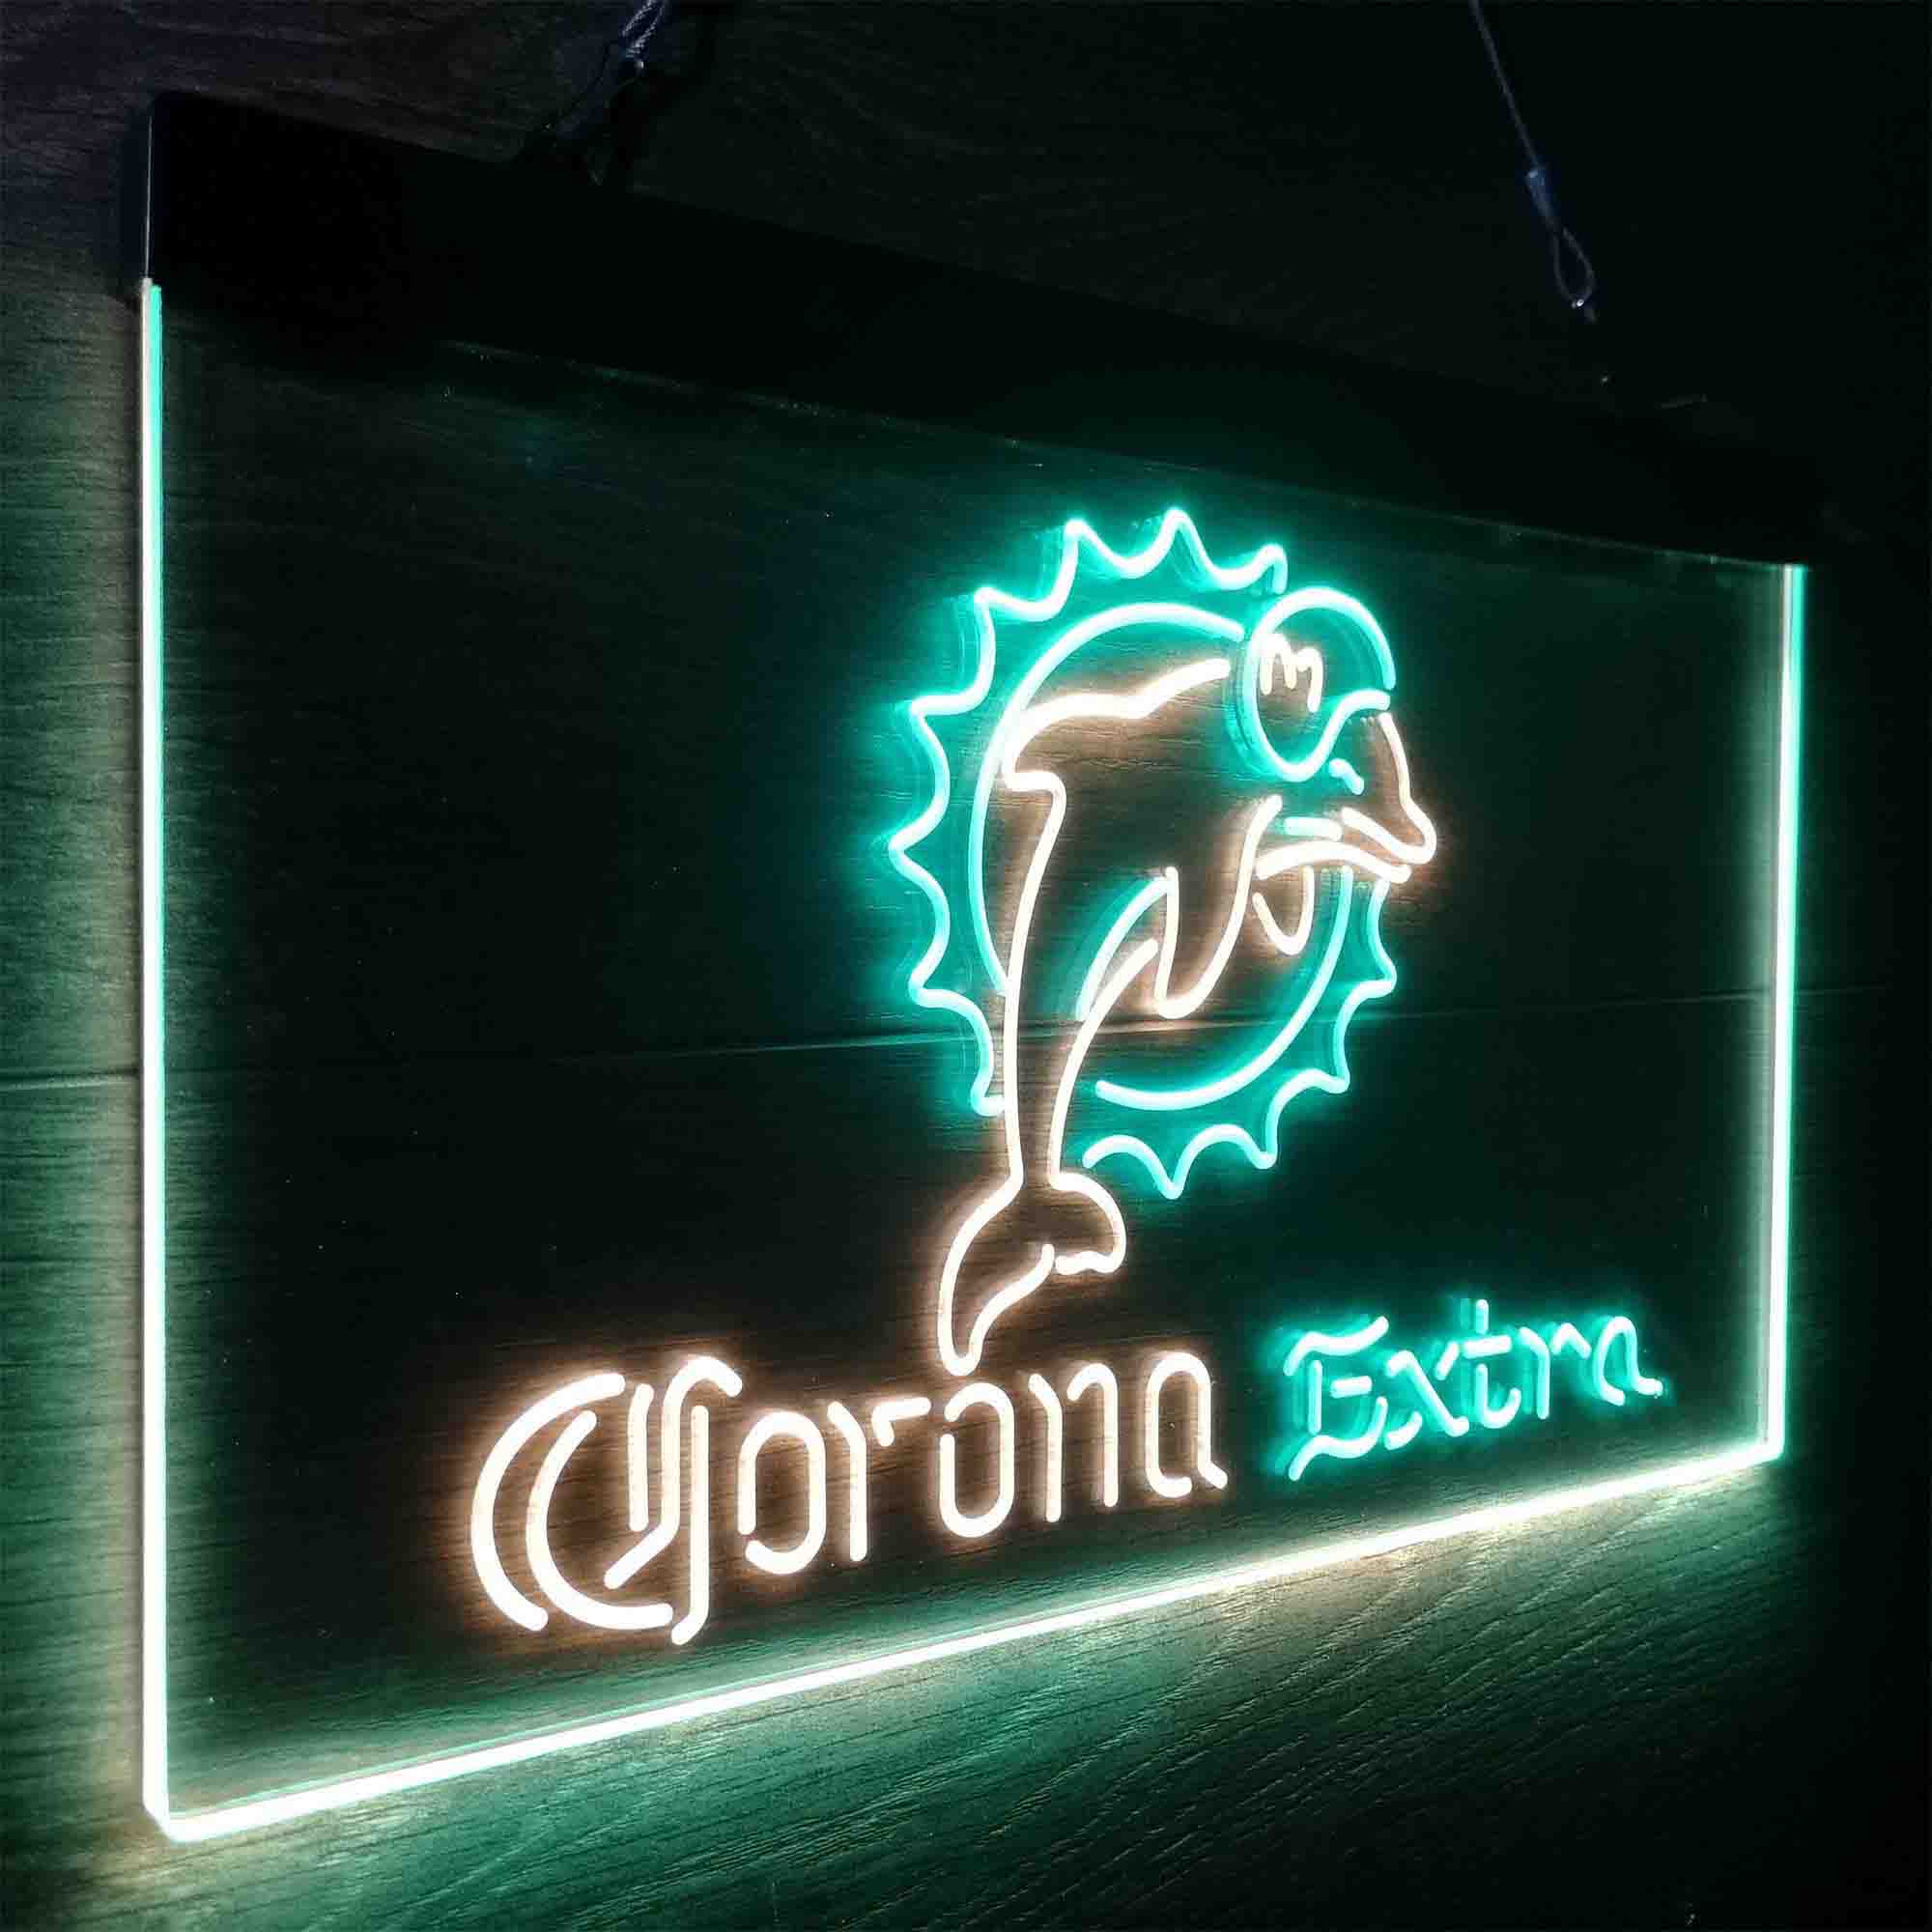 Corona Extra Bar Miami Dolphins Est. 1966 LED Neon Sign